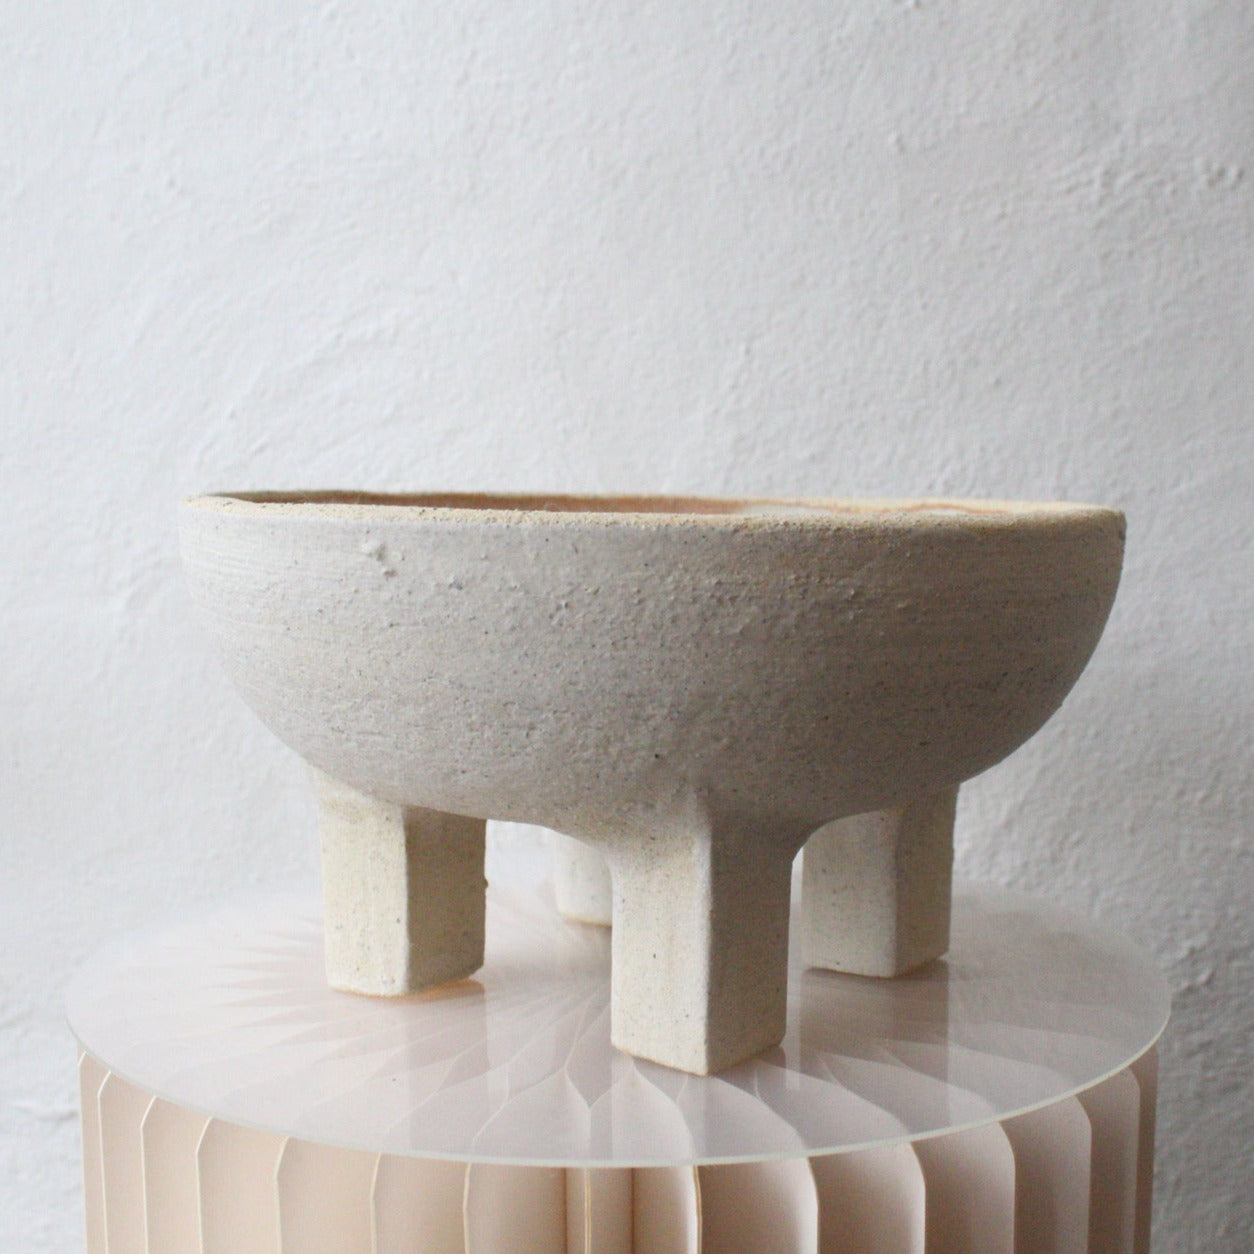 Nur Ceramics Ritual Bowl - Large